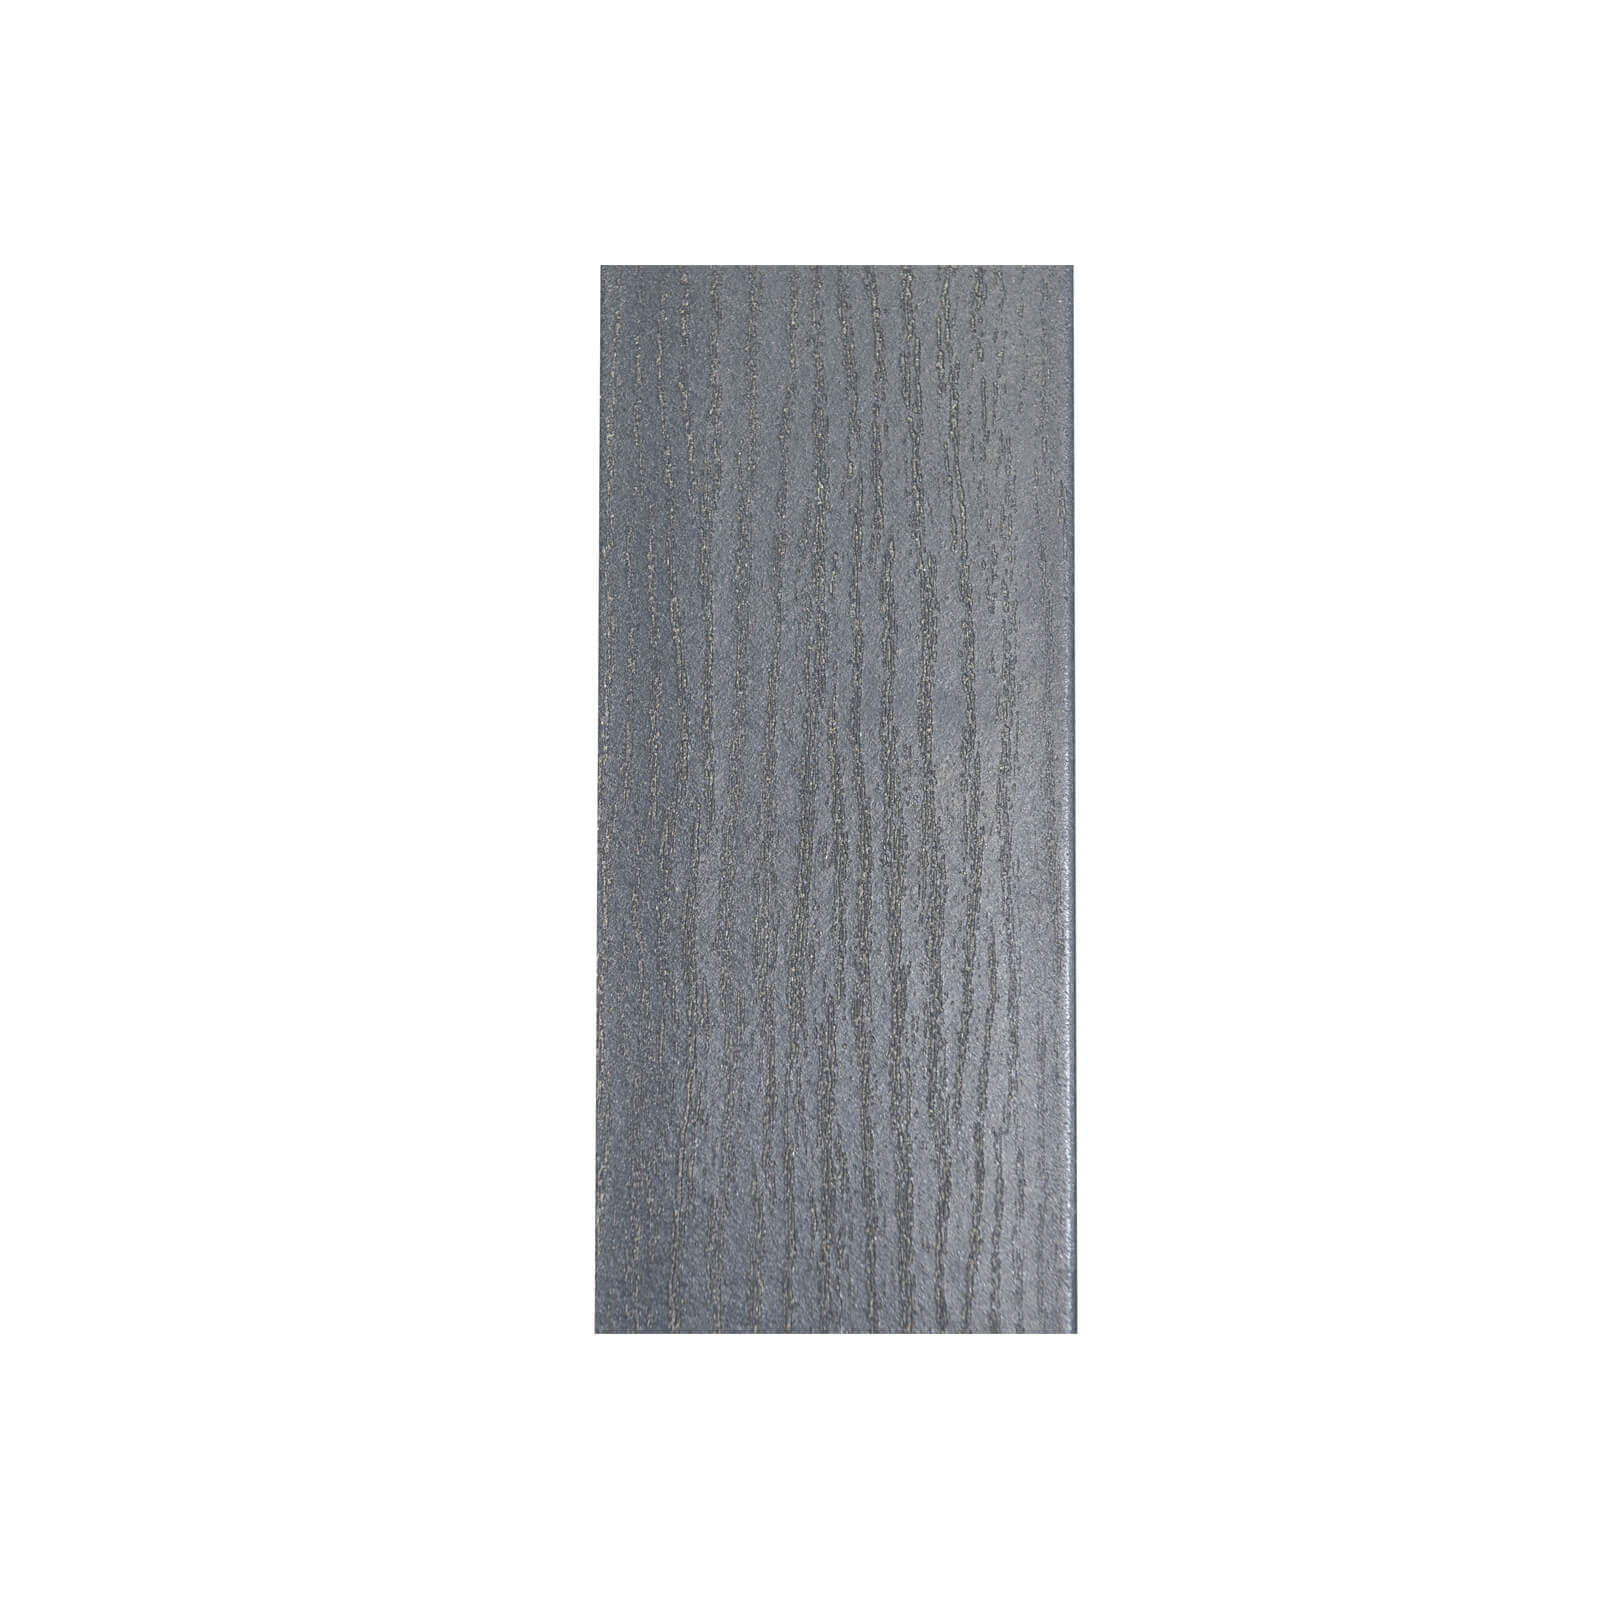 Ecodek Composite Deck Kit - Grey